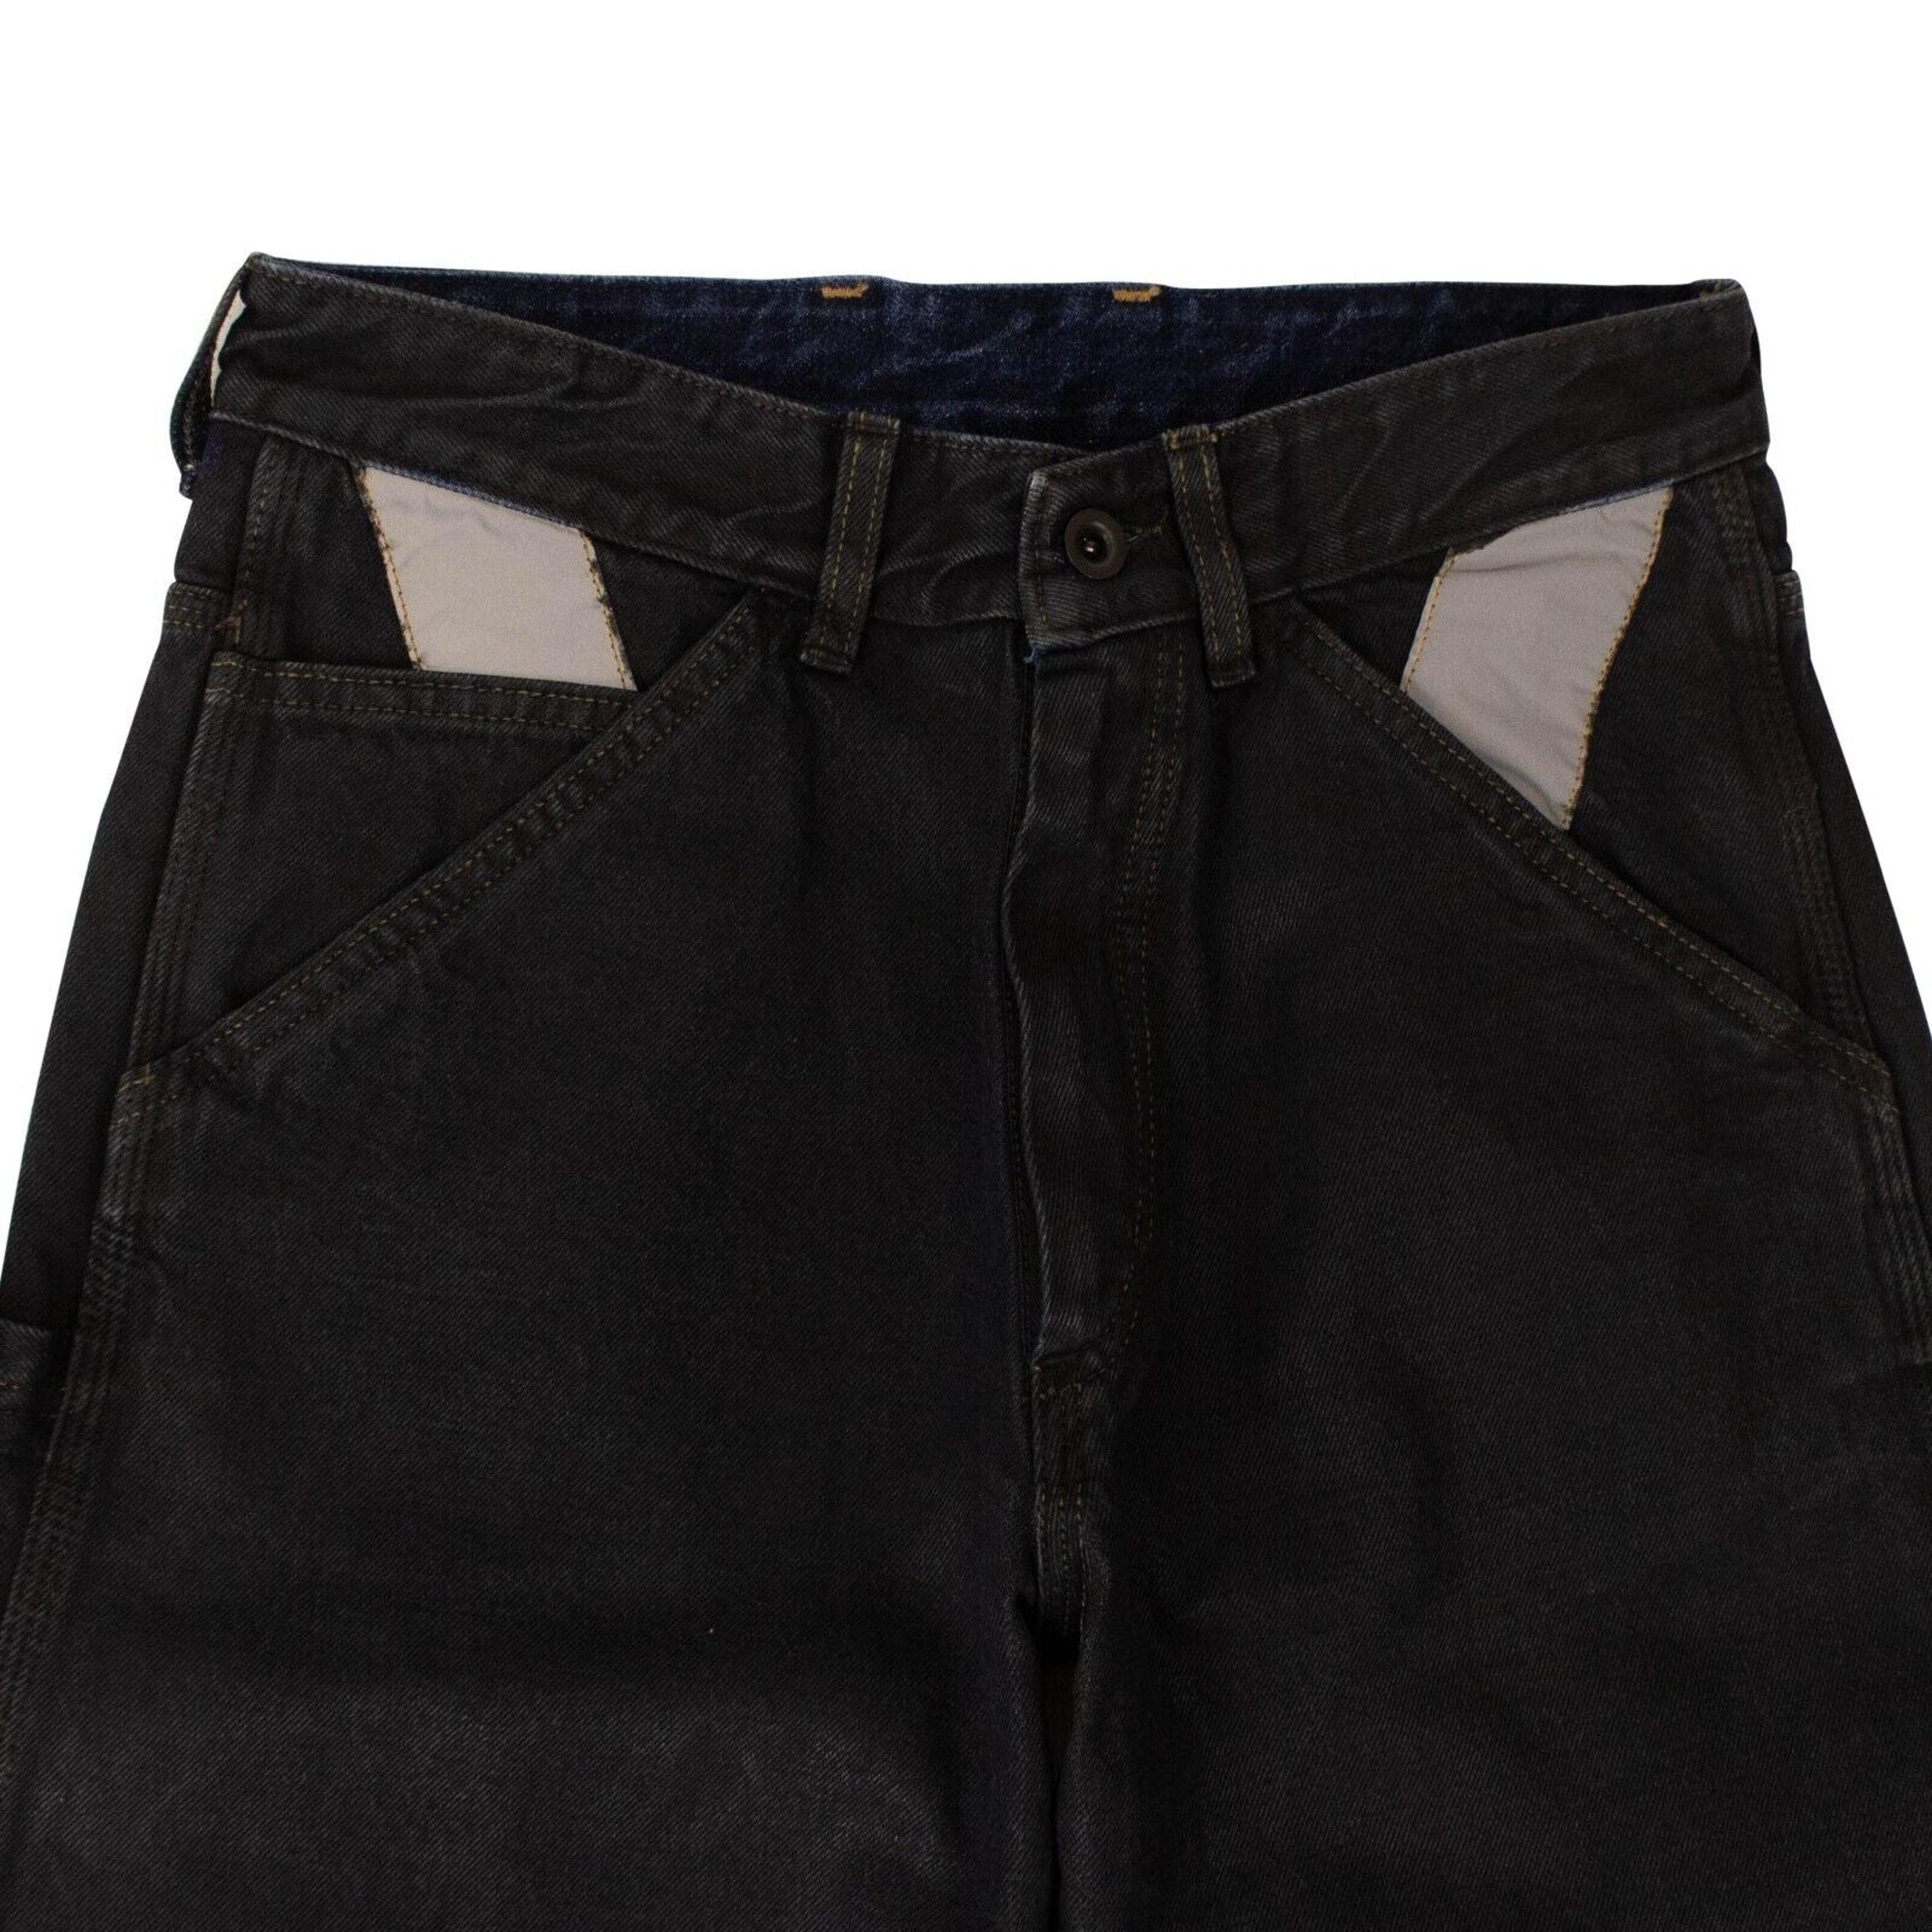 Alternate View 1 of U.P.W.W. Worker Denim Jeans - Black